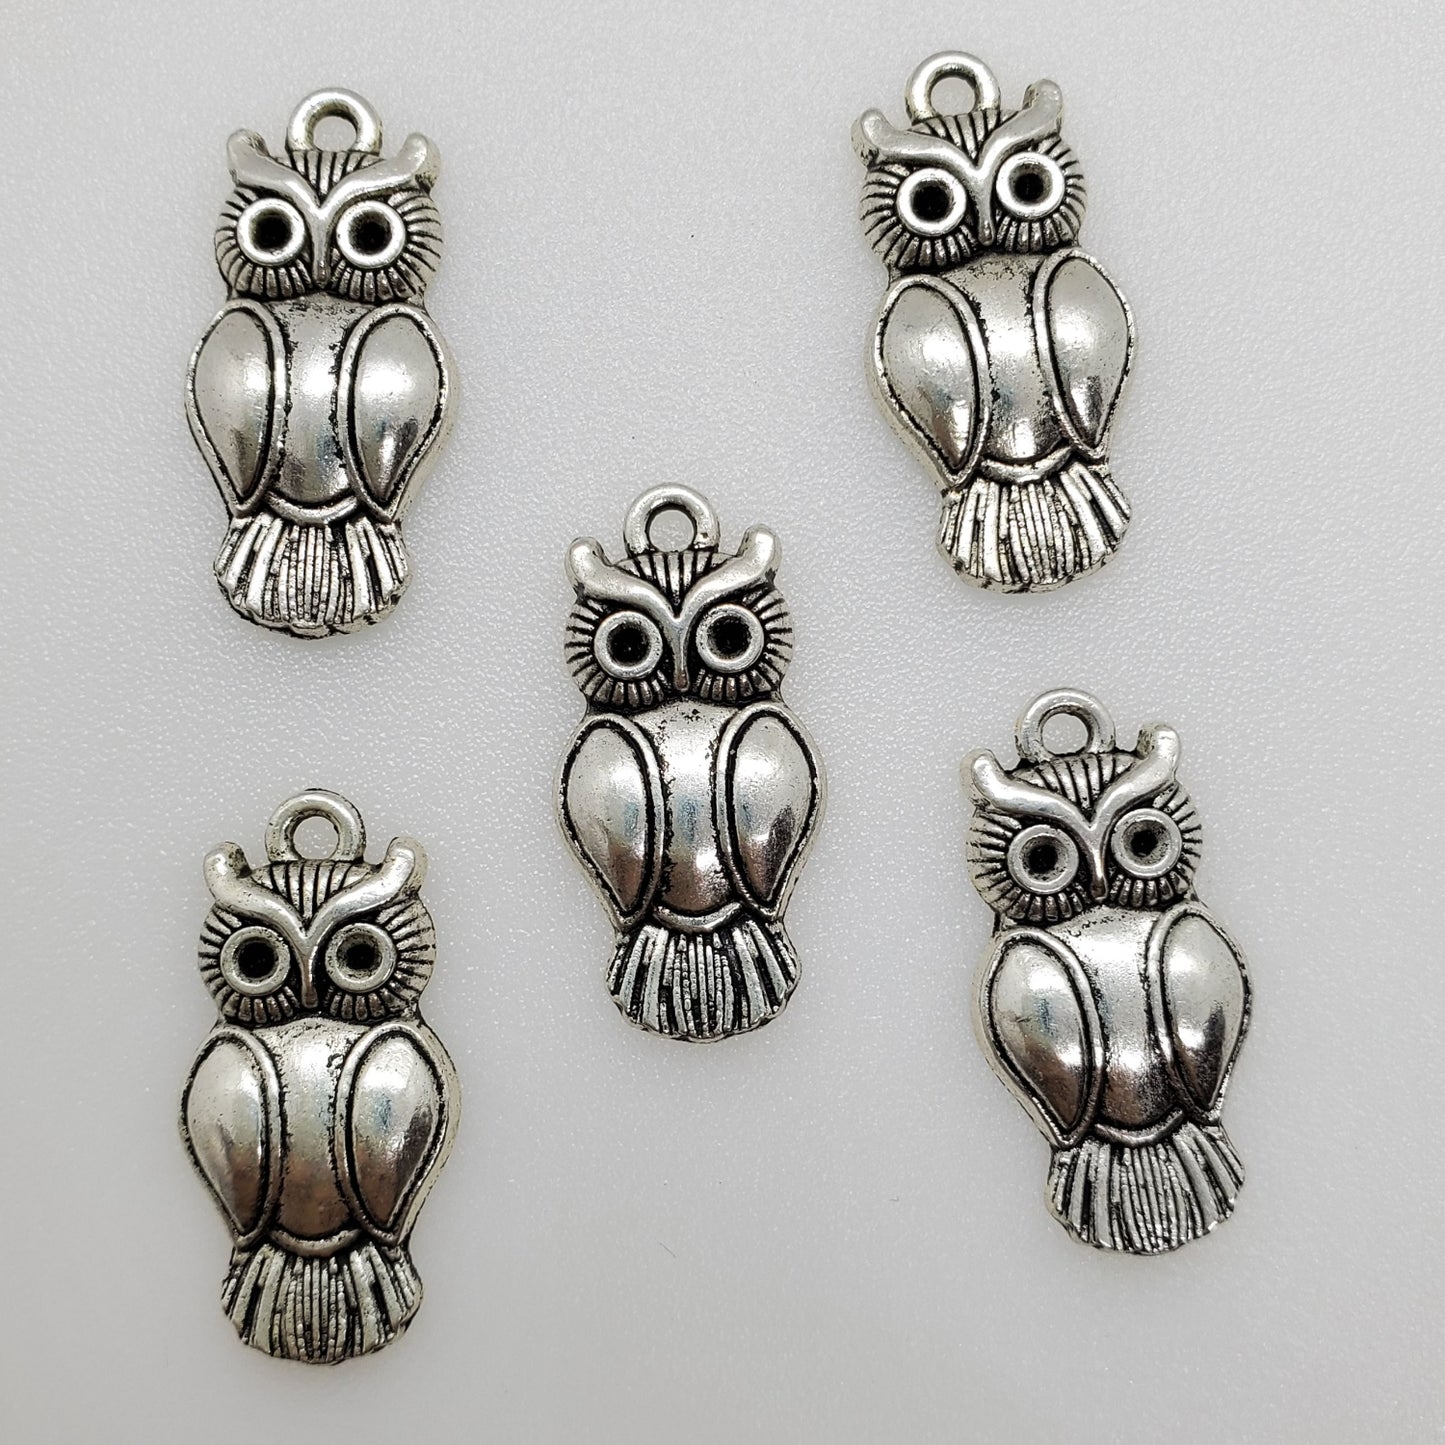 Small Owl Charms (5)